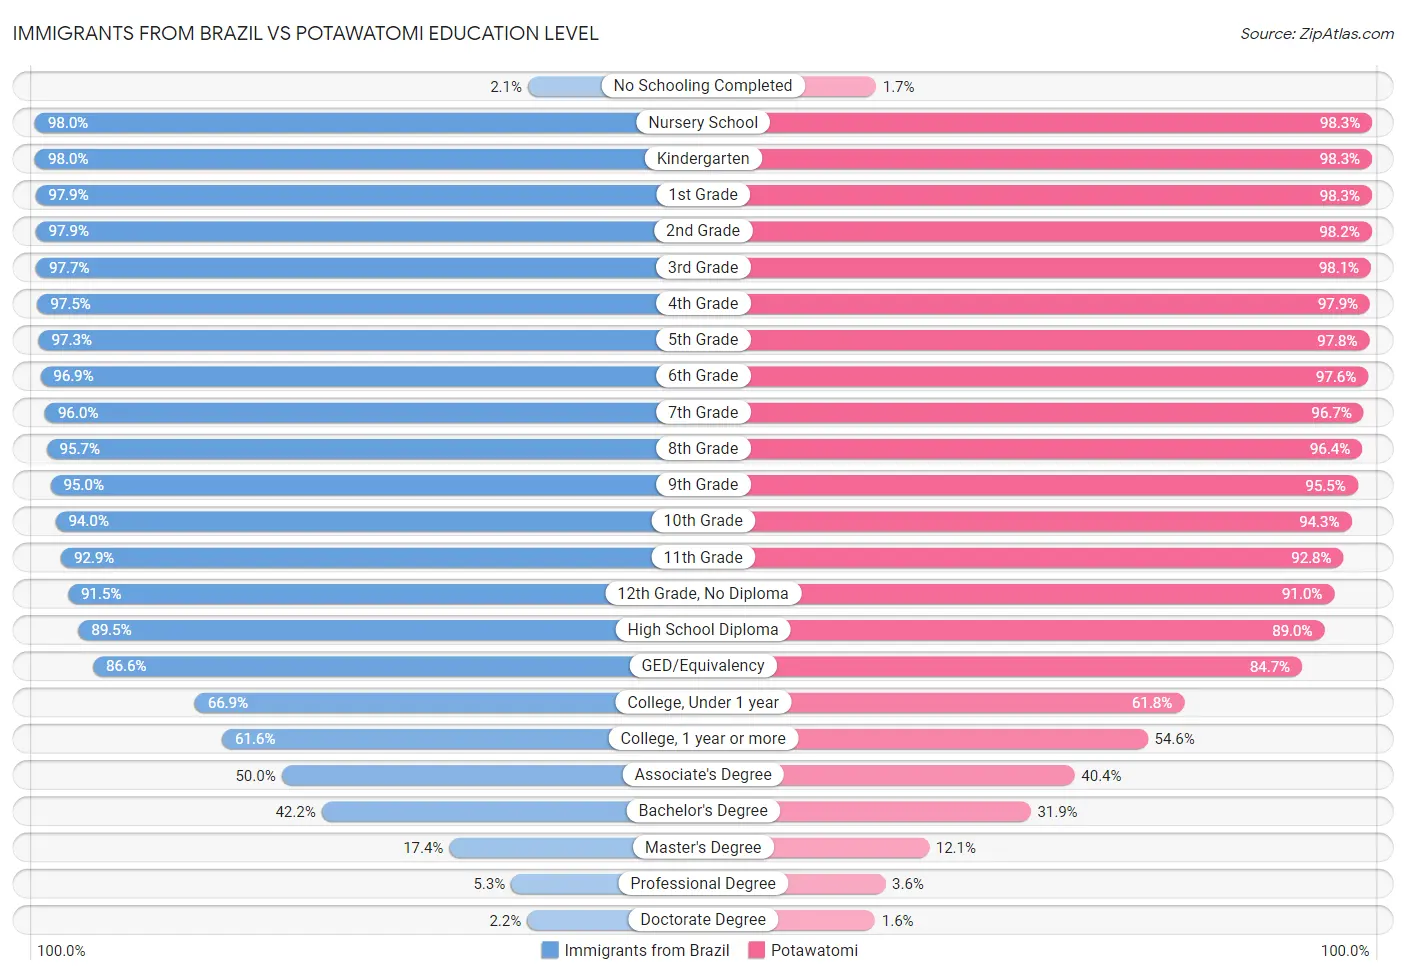 Immigrants from Brazil vs Potawatomi Education Level